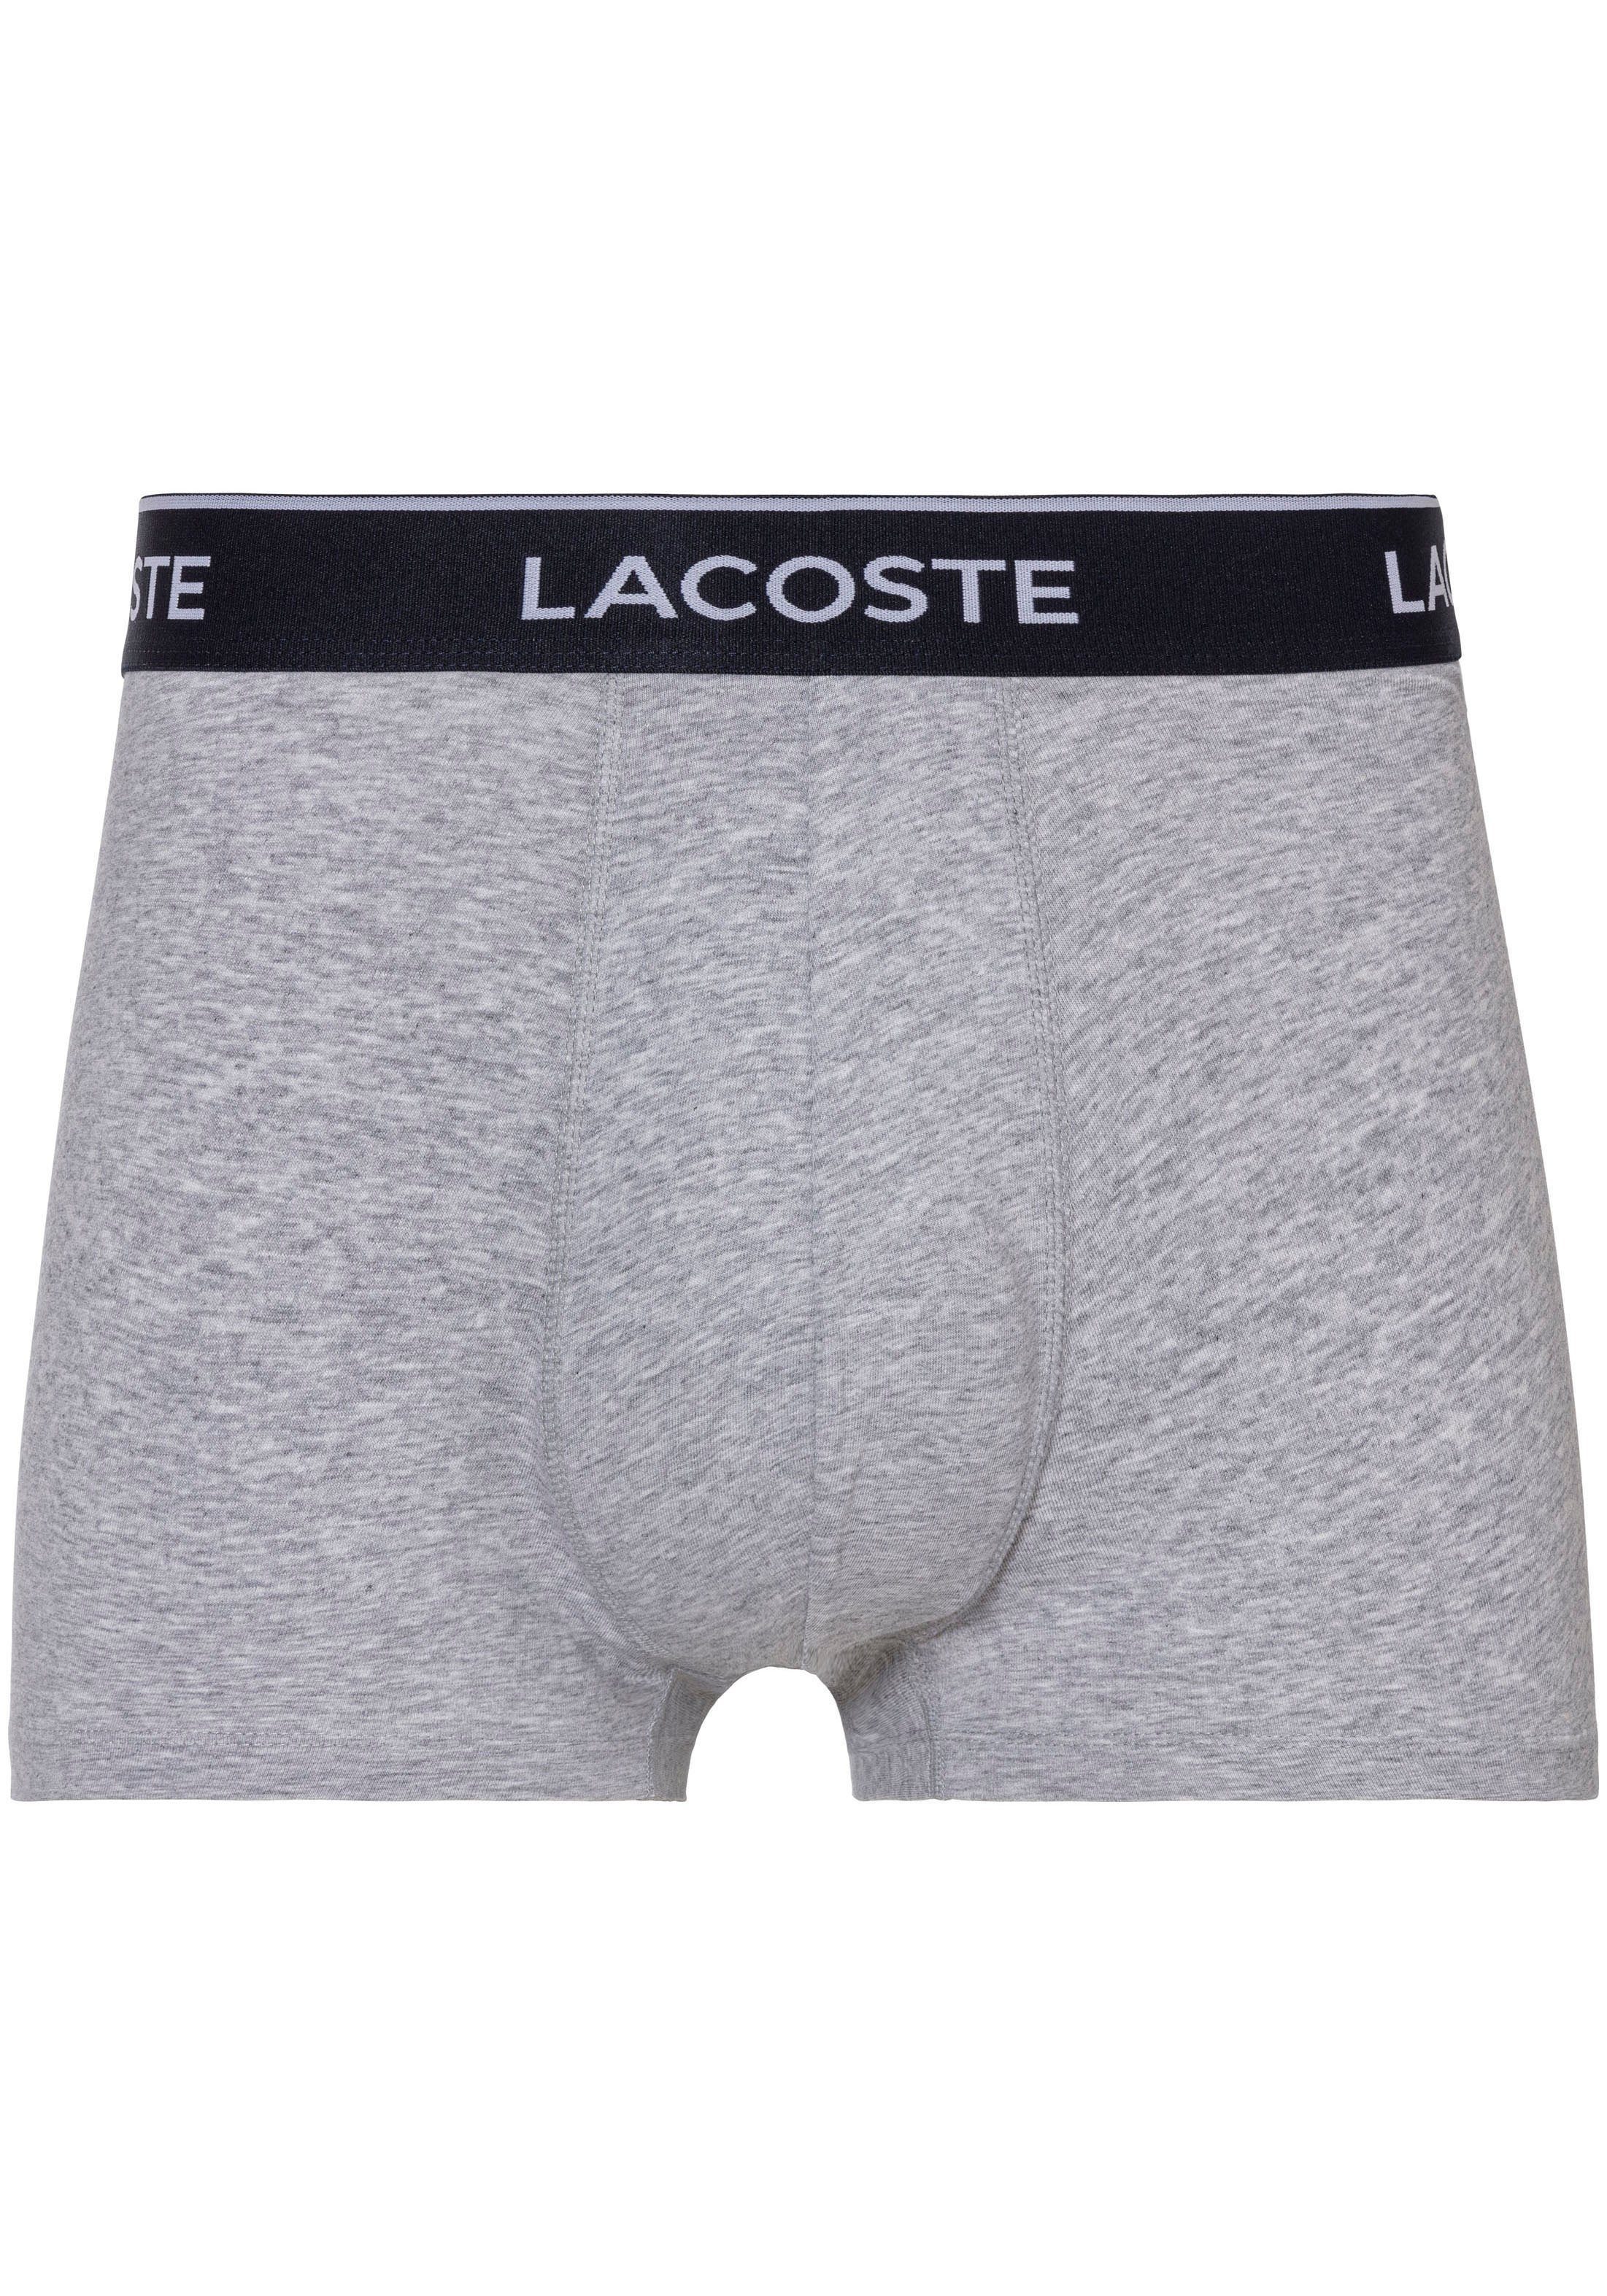 Lacoste Trunk Material 3er-Pack) Herren Lacoste eng aus Boxershorts atmungsaktivem Premium 3-St., (Packung, grau-blau-hb